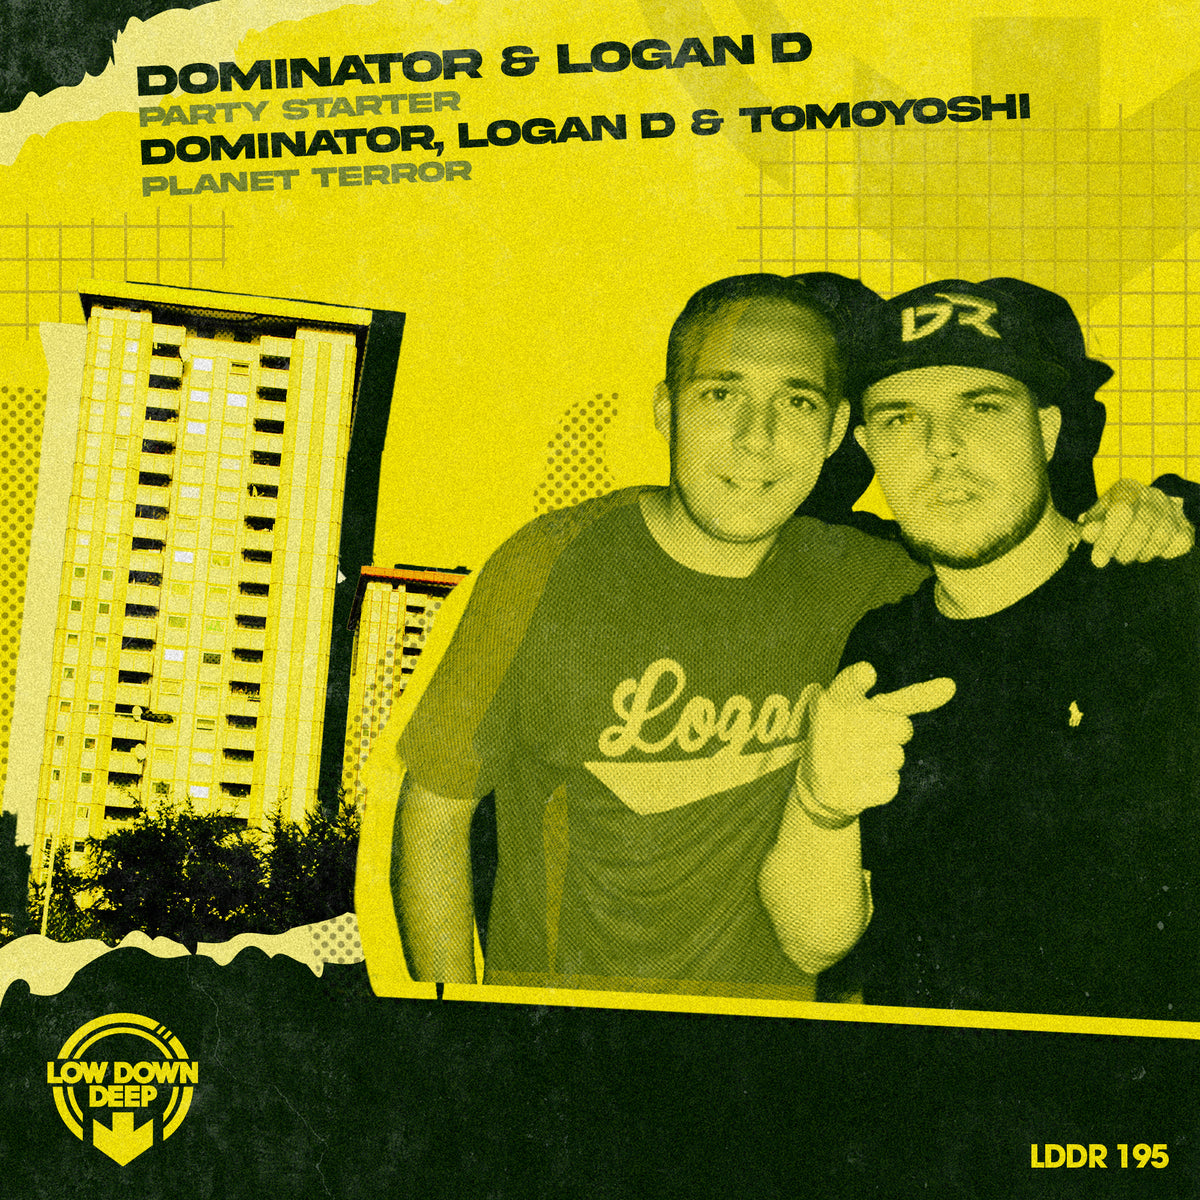 LDD 195 - Dominator & Logan D 'Party Starter' | Dominator, Logan D & Tomoyoshi 'Planet Terror'